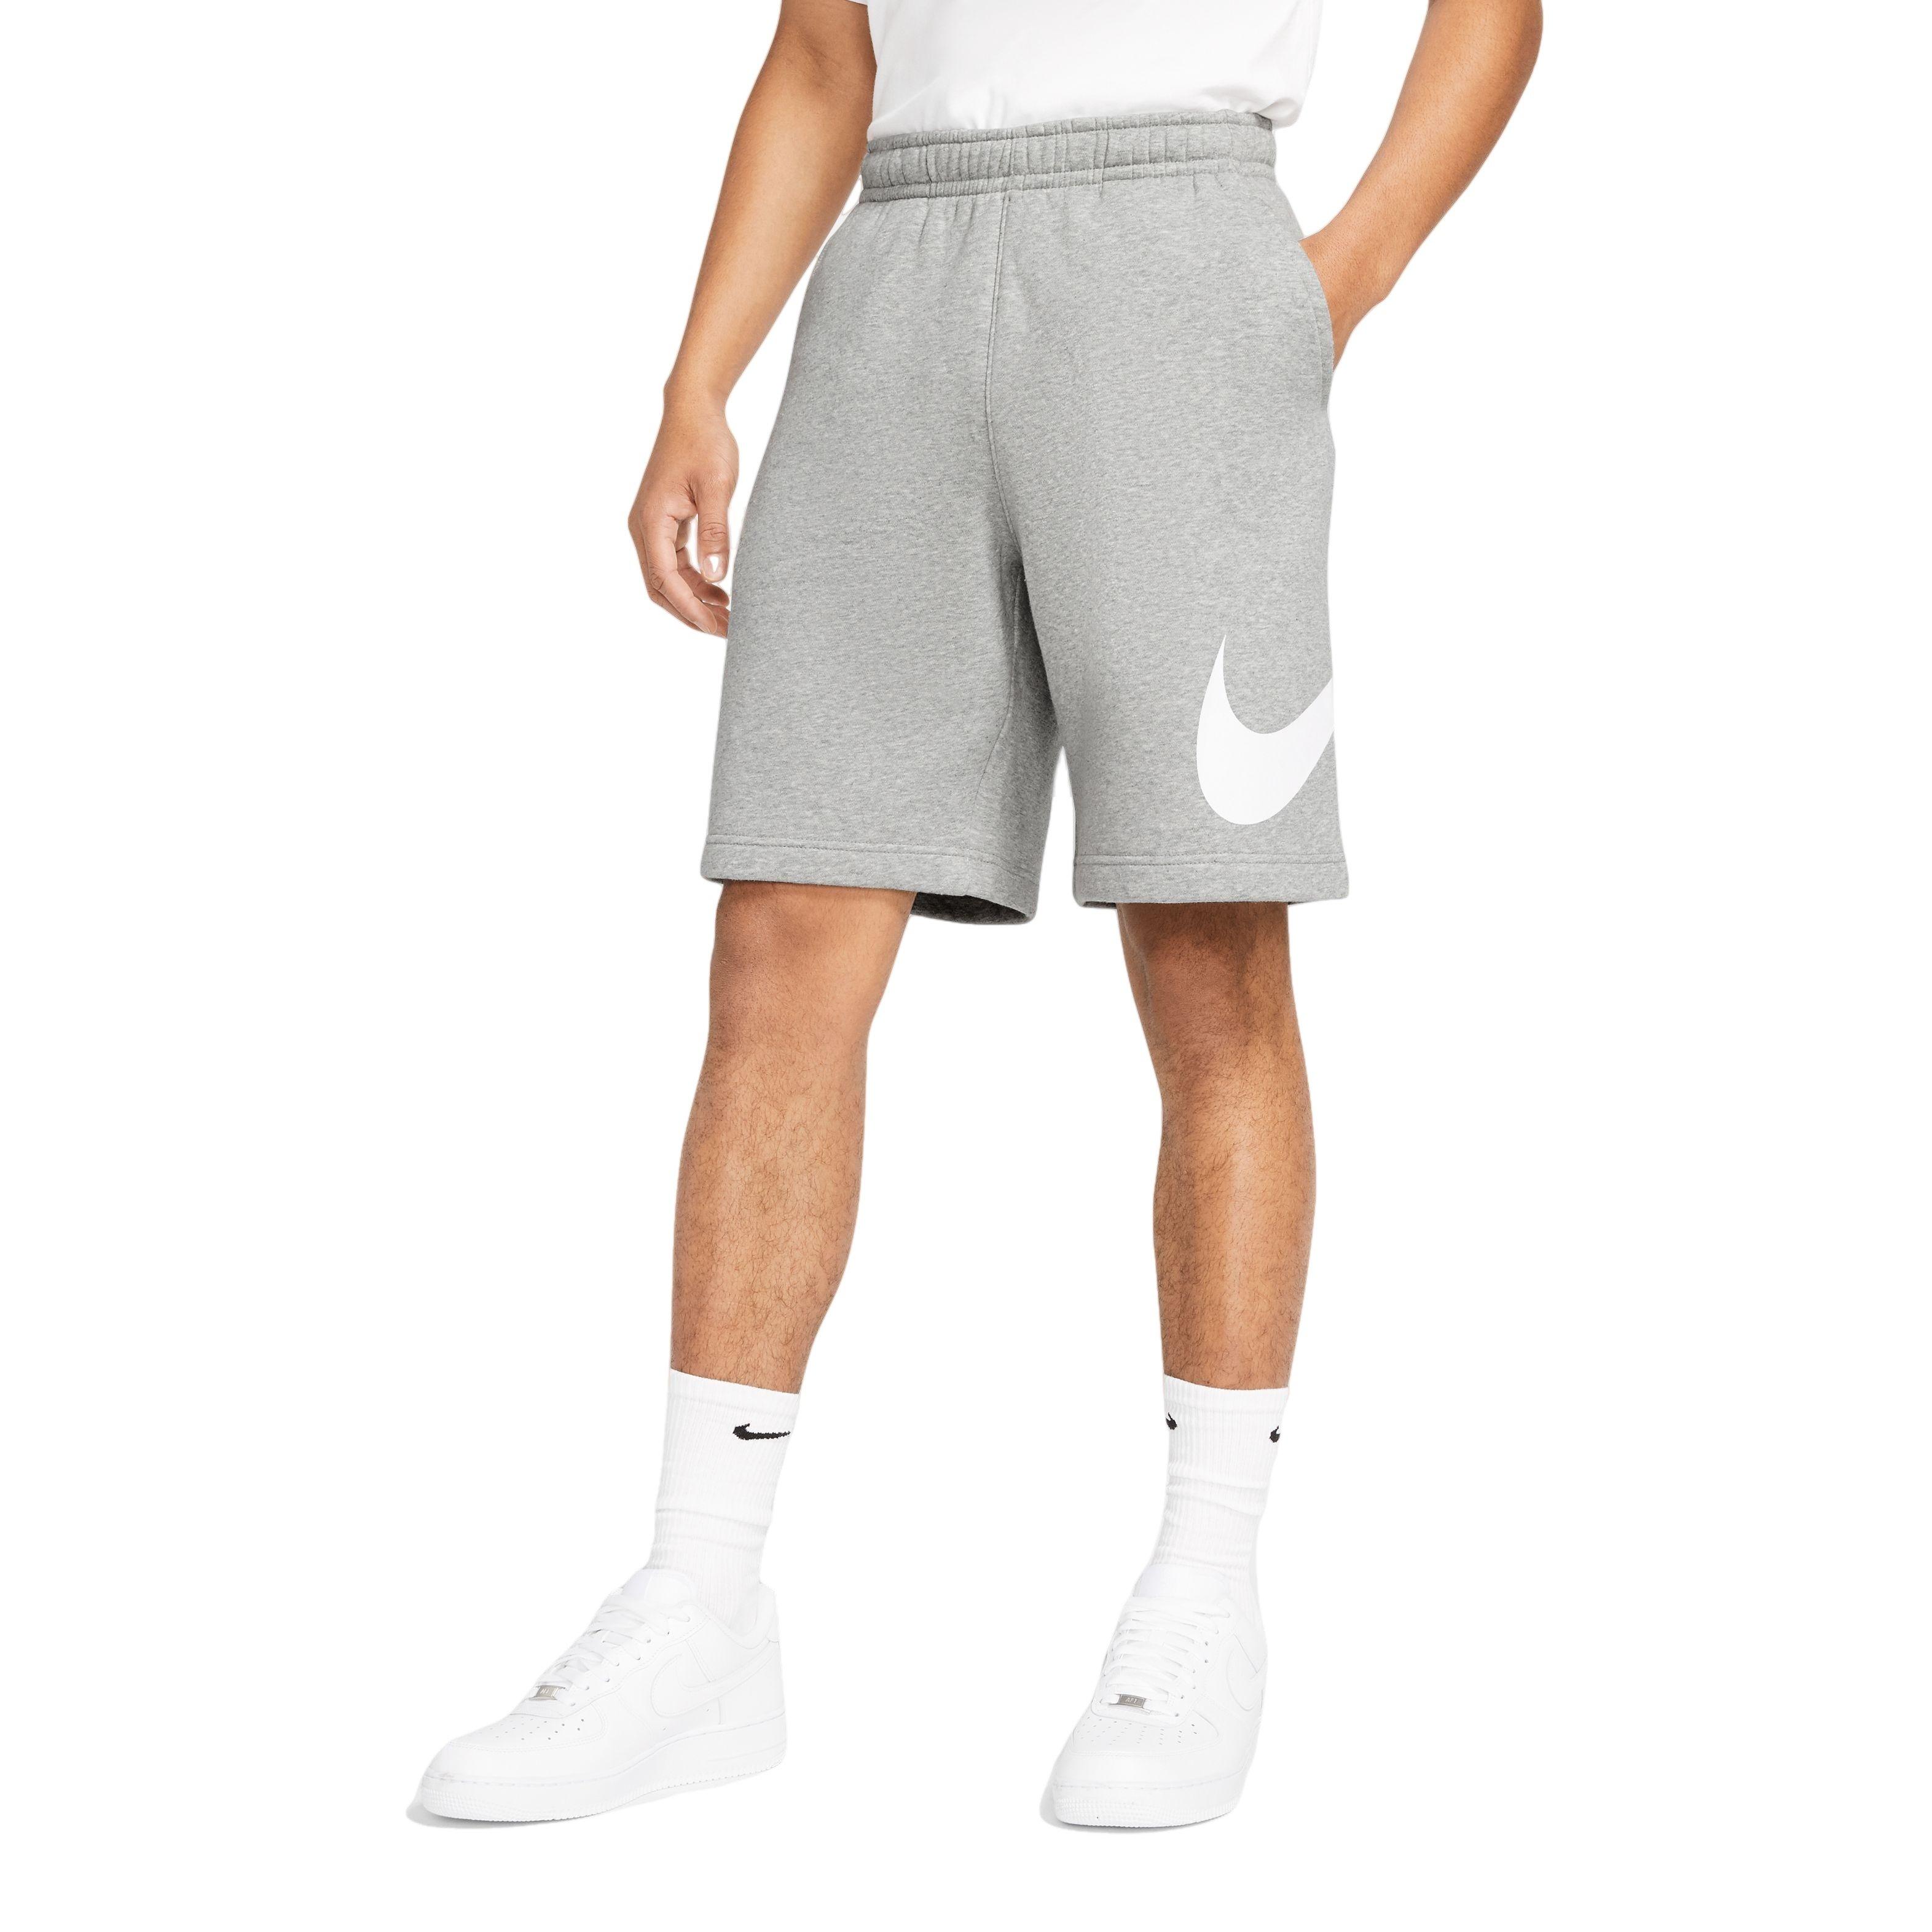 Sneakers Release – Nike Lebron 18 “Minneapolis Lakers”  Black/University Gold/Coast